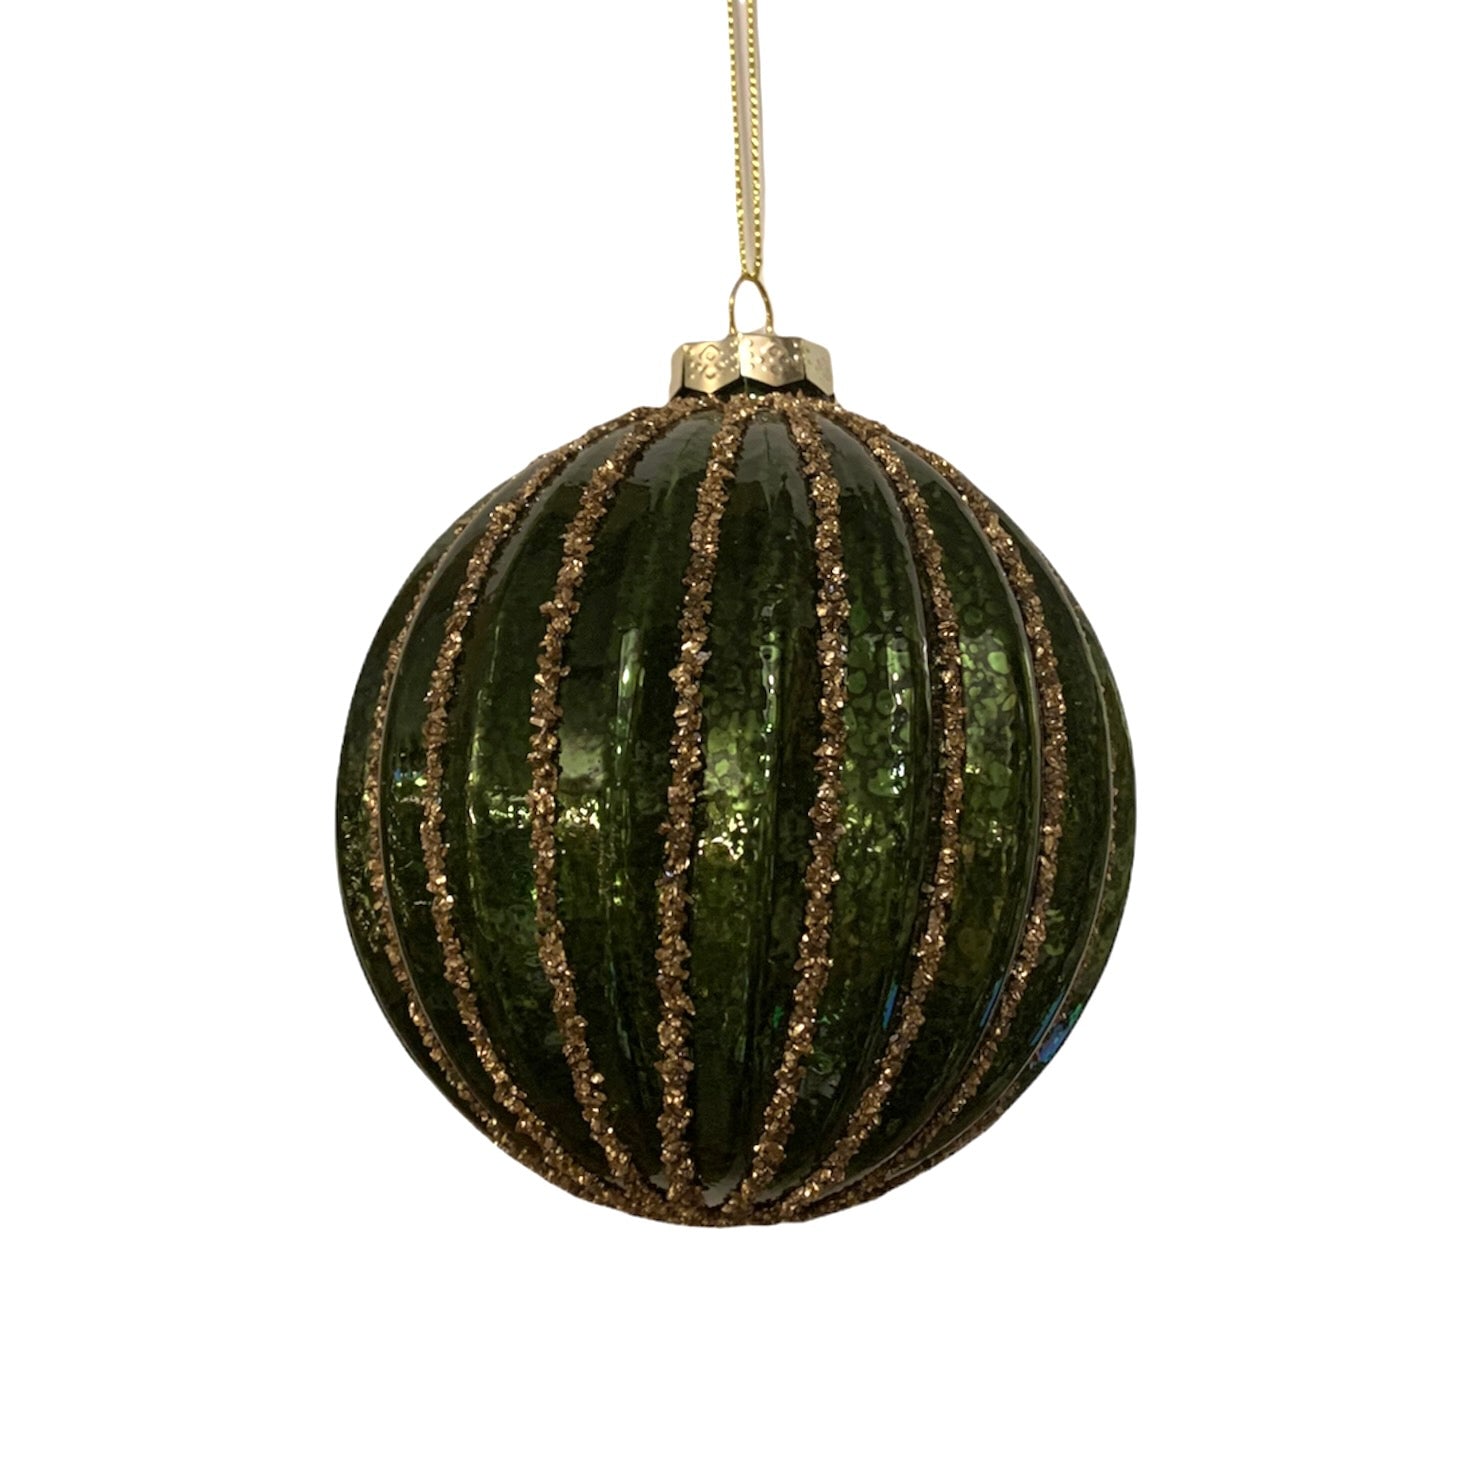 Ridged Green with Gold Glitter Glass Ball Ornament